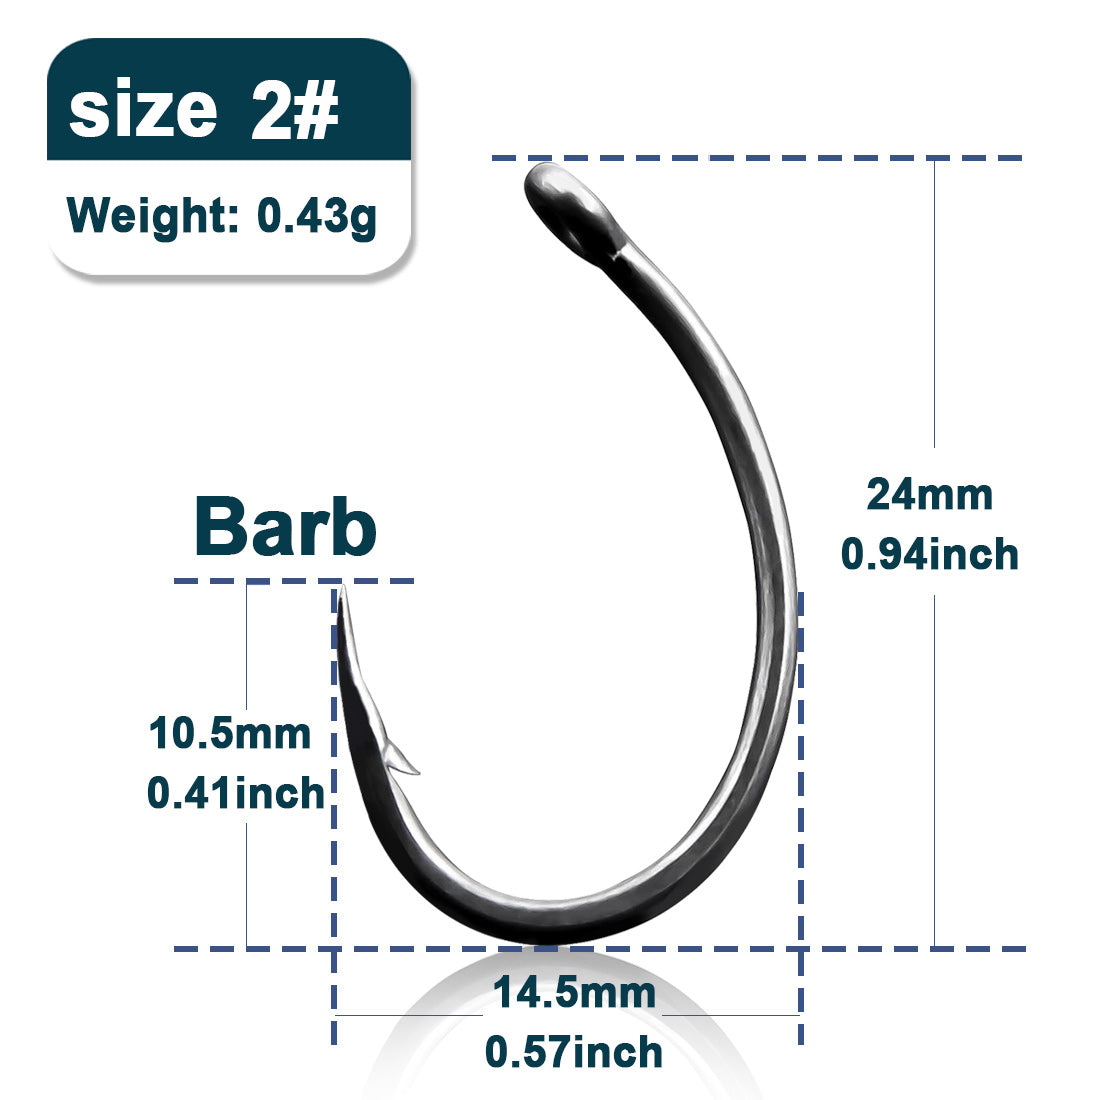 Zebco Nickel Treble Hooks - Barbed - Size 2